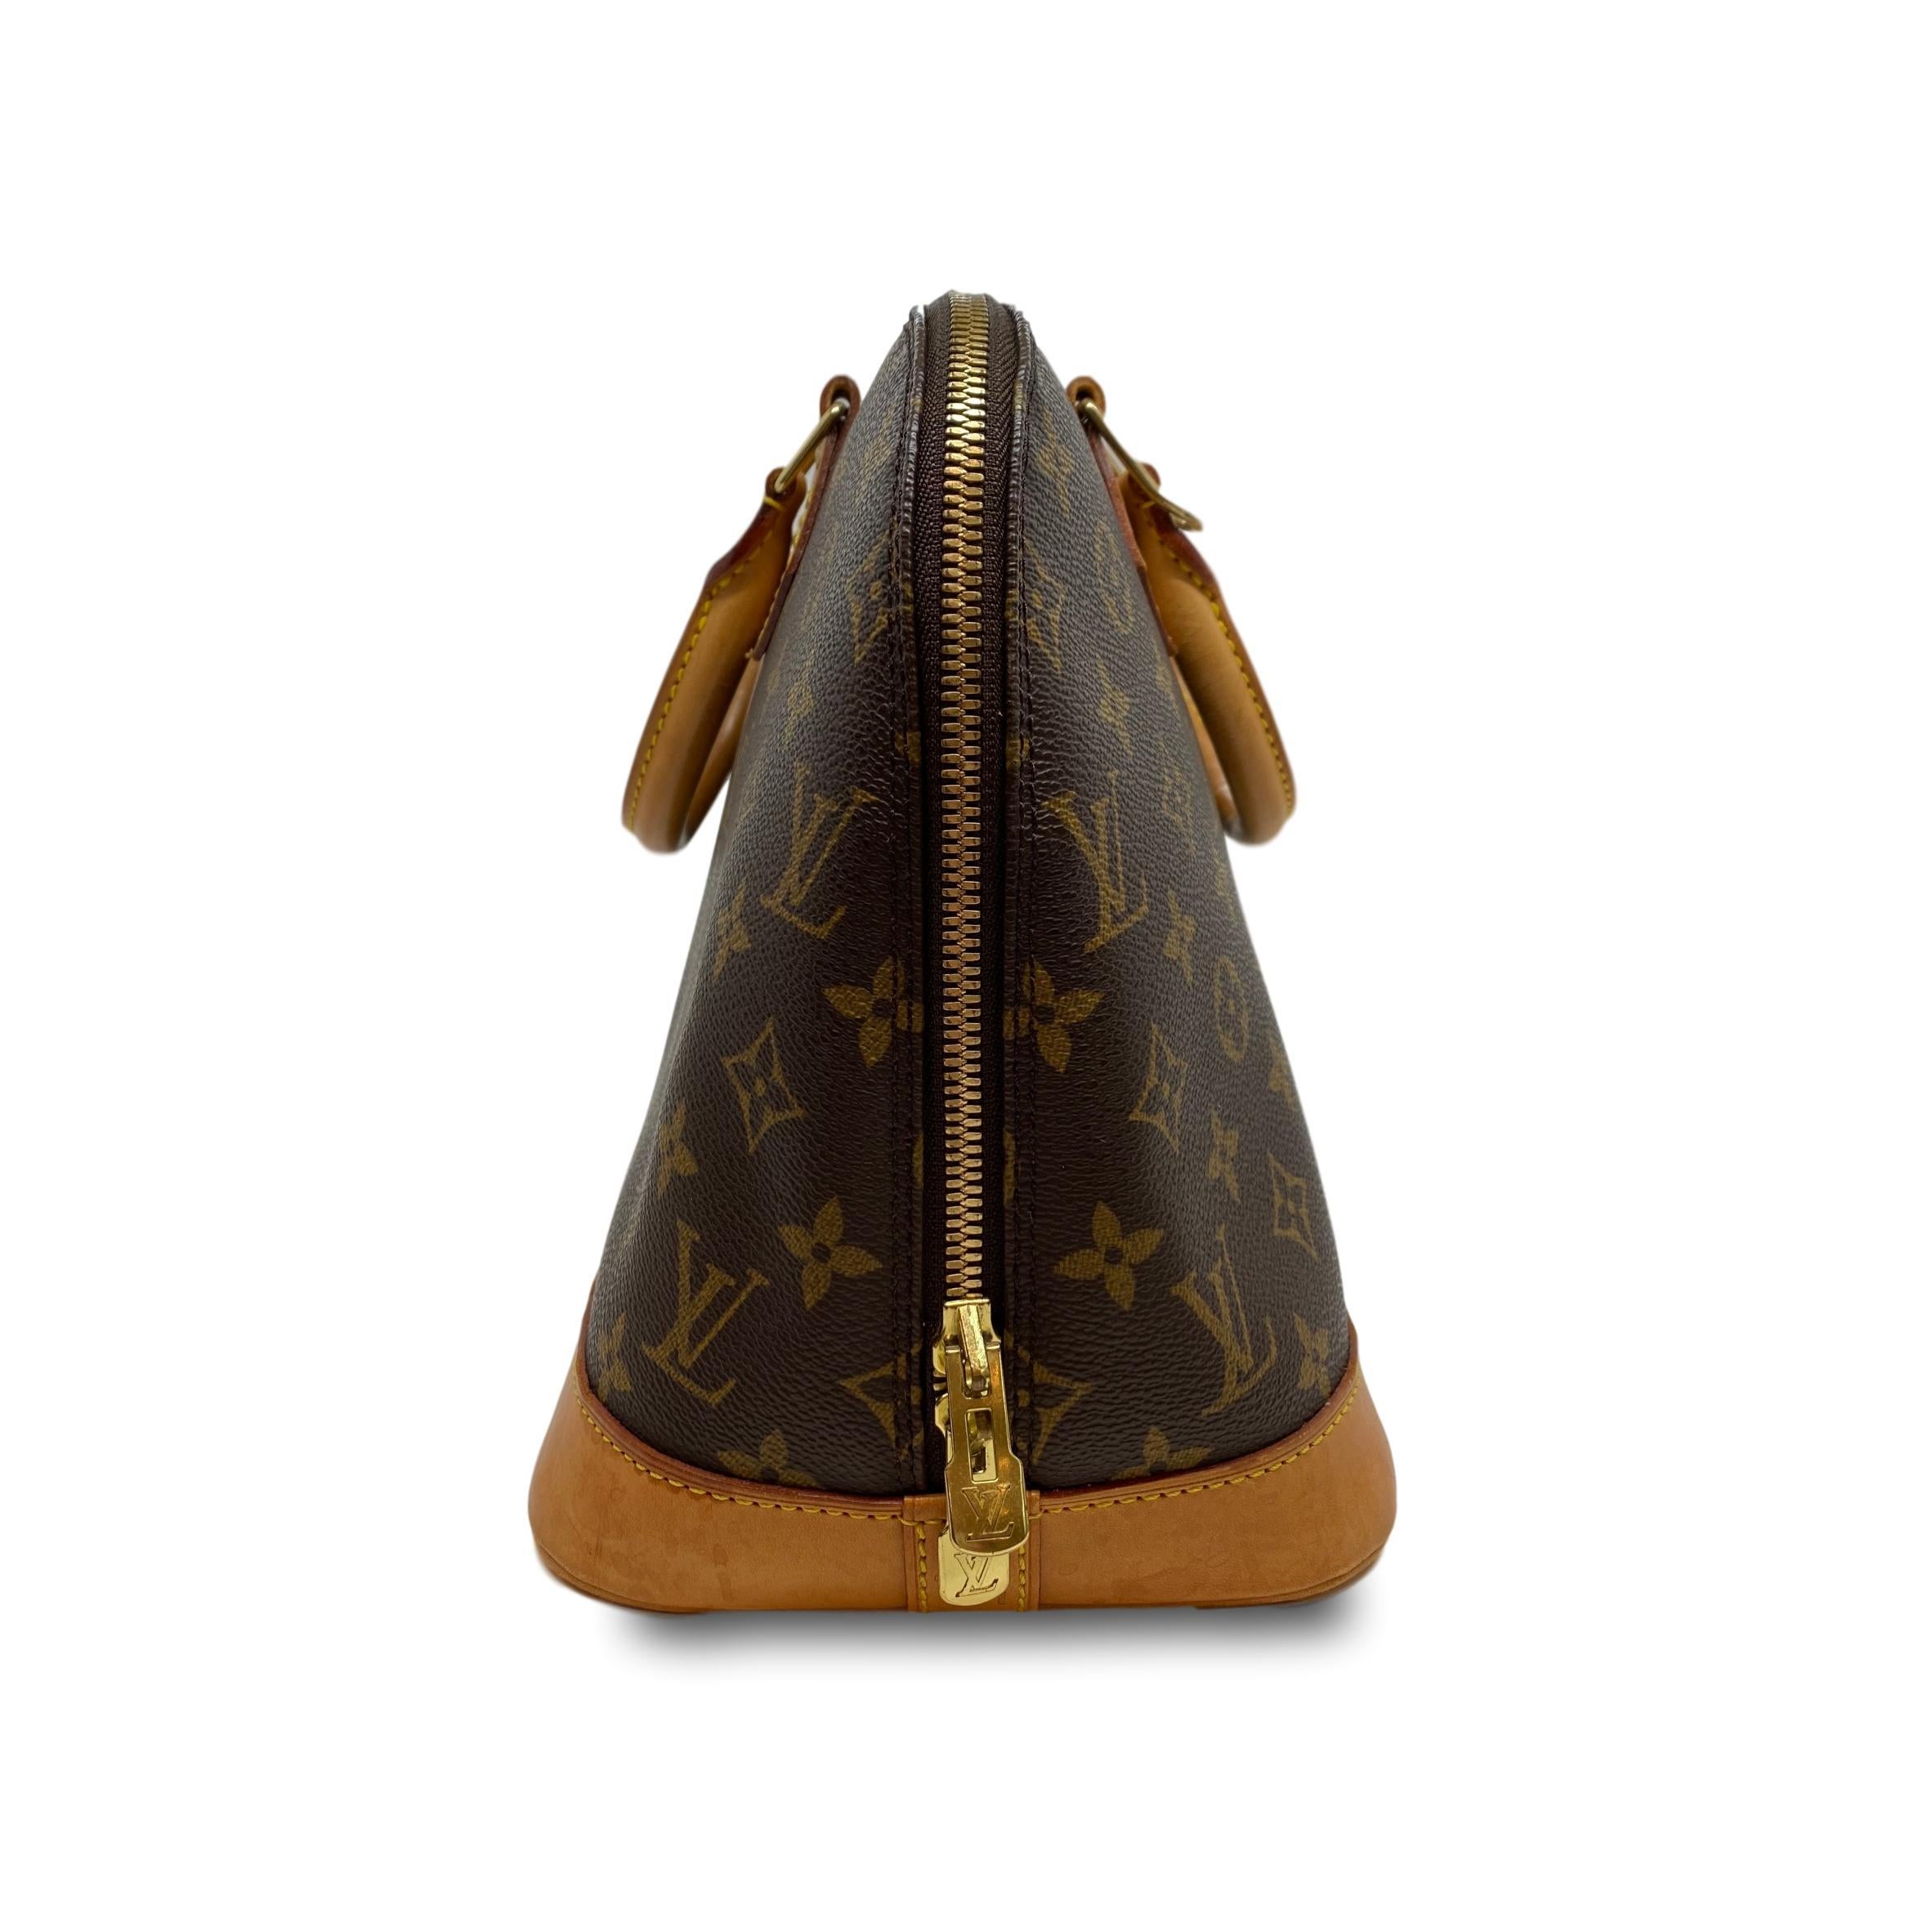 Women's or Men's Louis Vuitton Alma PM Monogram Top Handle Handbag, France 2001.